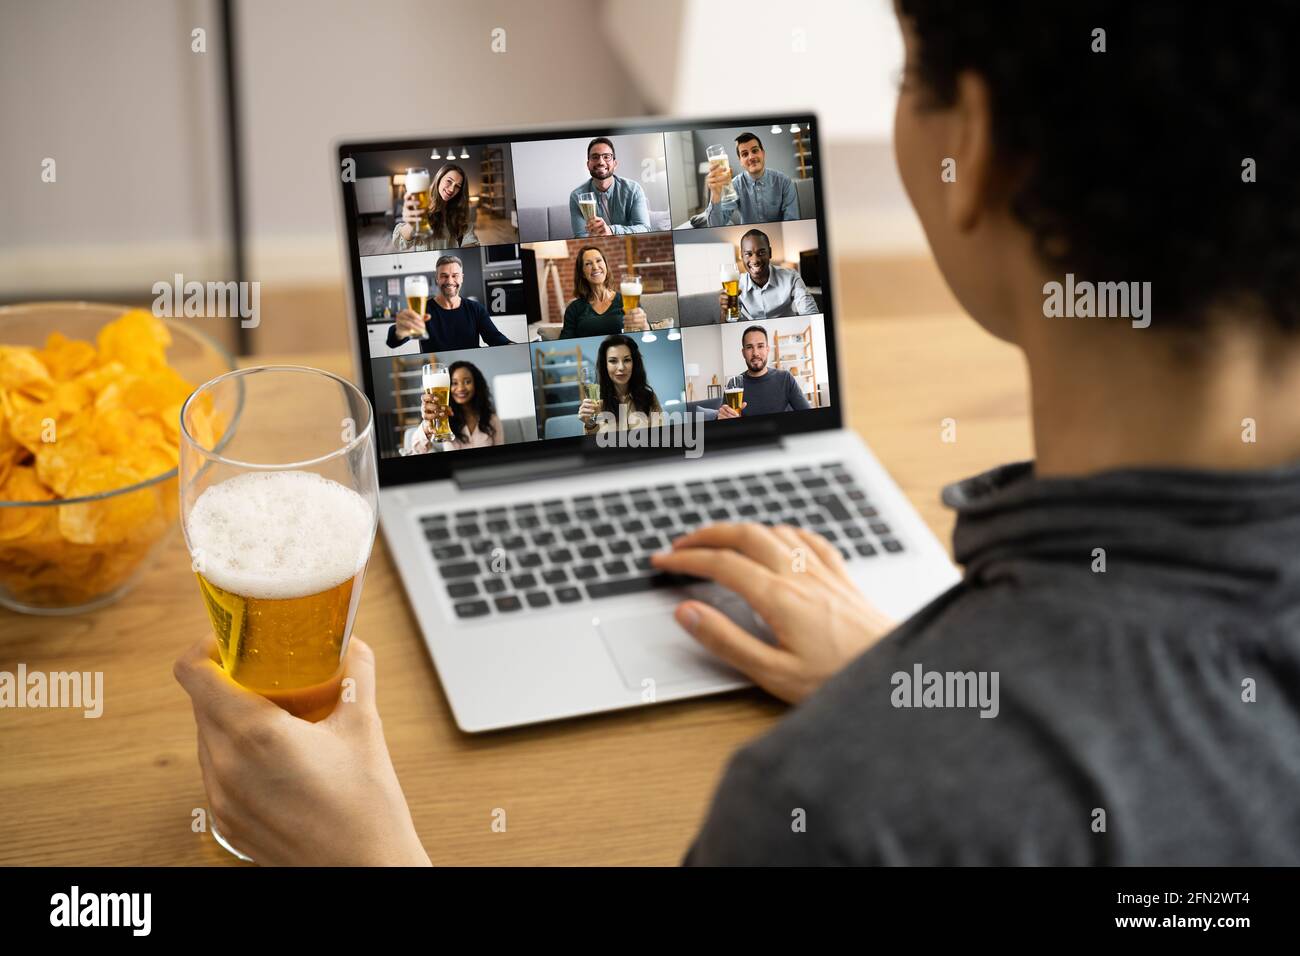 Virtuelle Bier Trinken Online-Party Mit Laptop Stockfotografie - Alamy